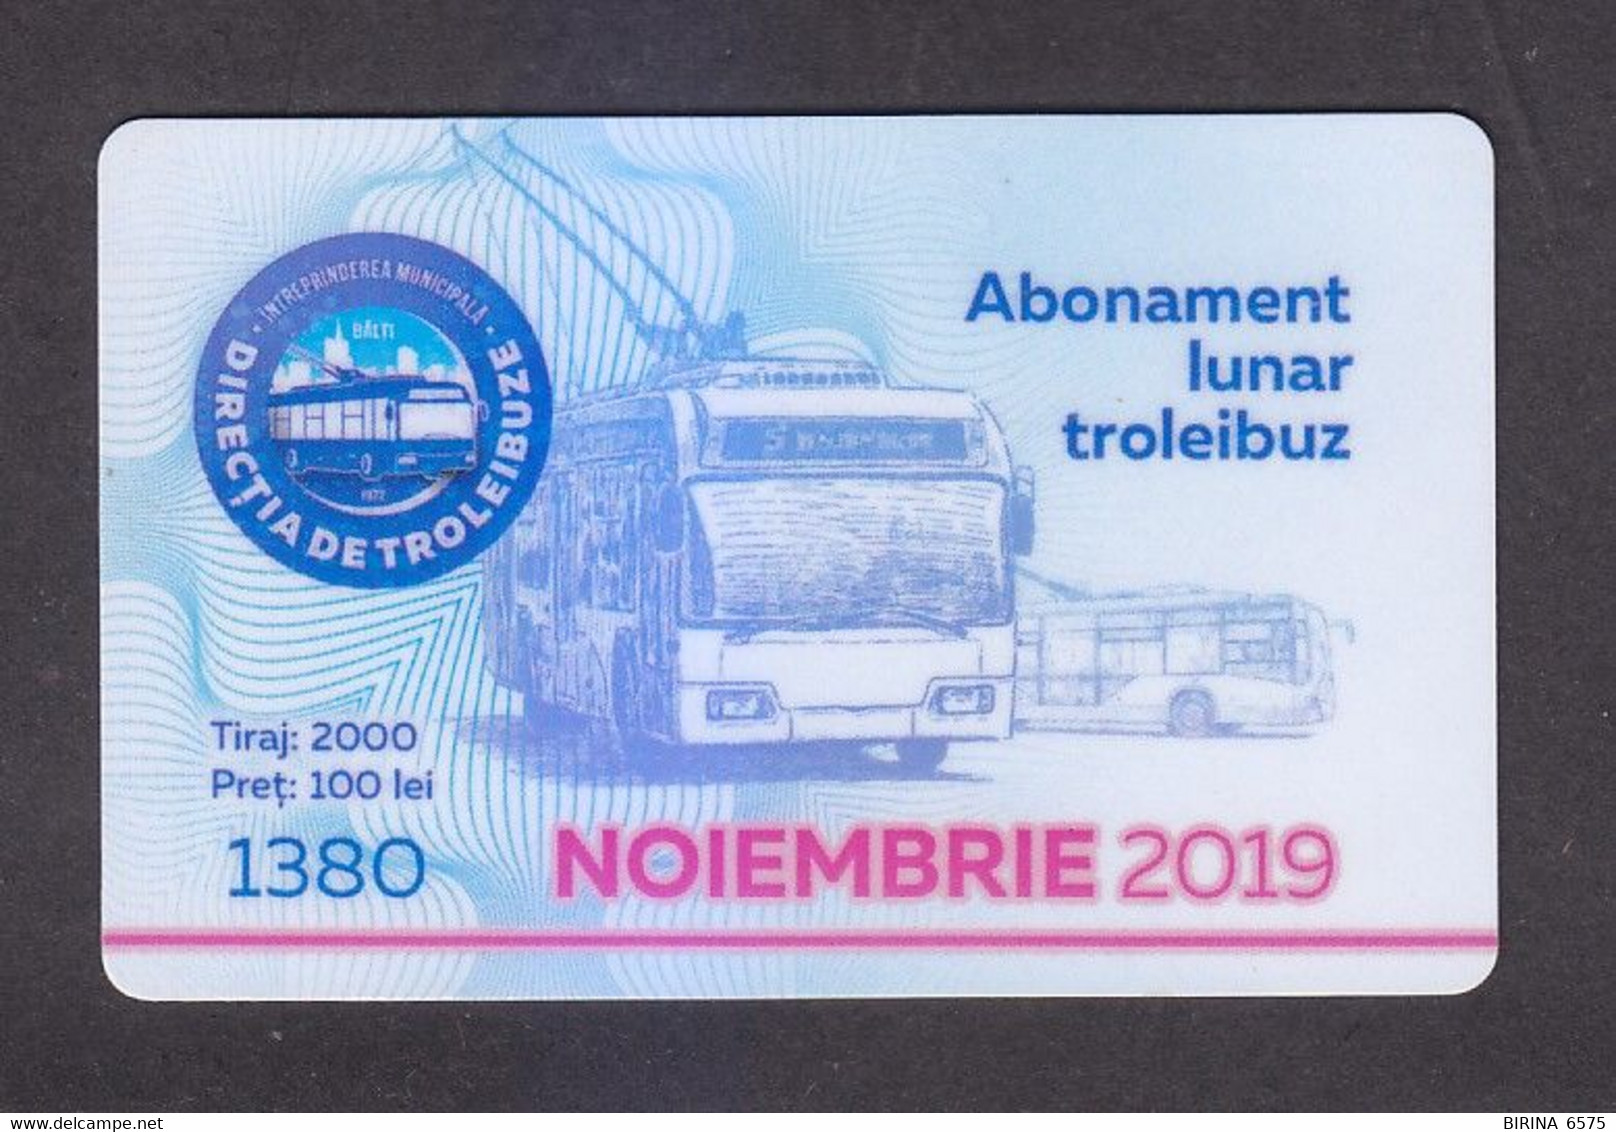 TRANSPORT CARD OF MOLDOVA. - 1-20 - Moldavie